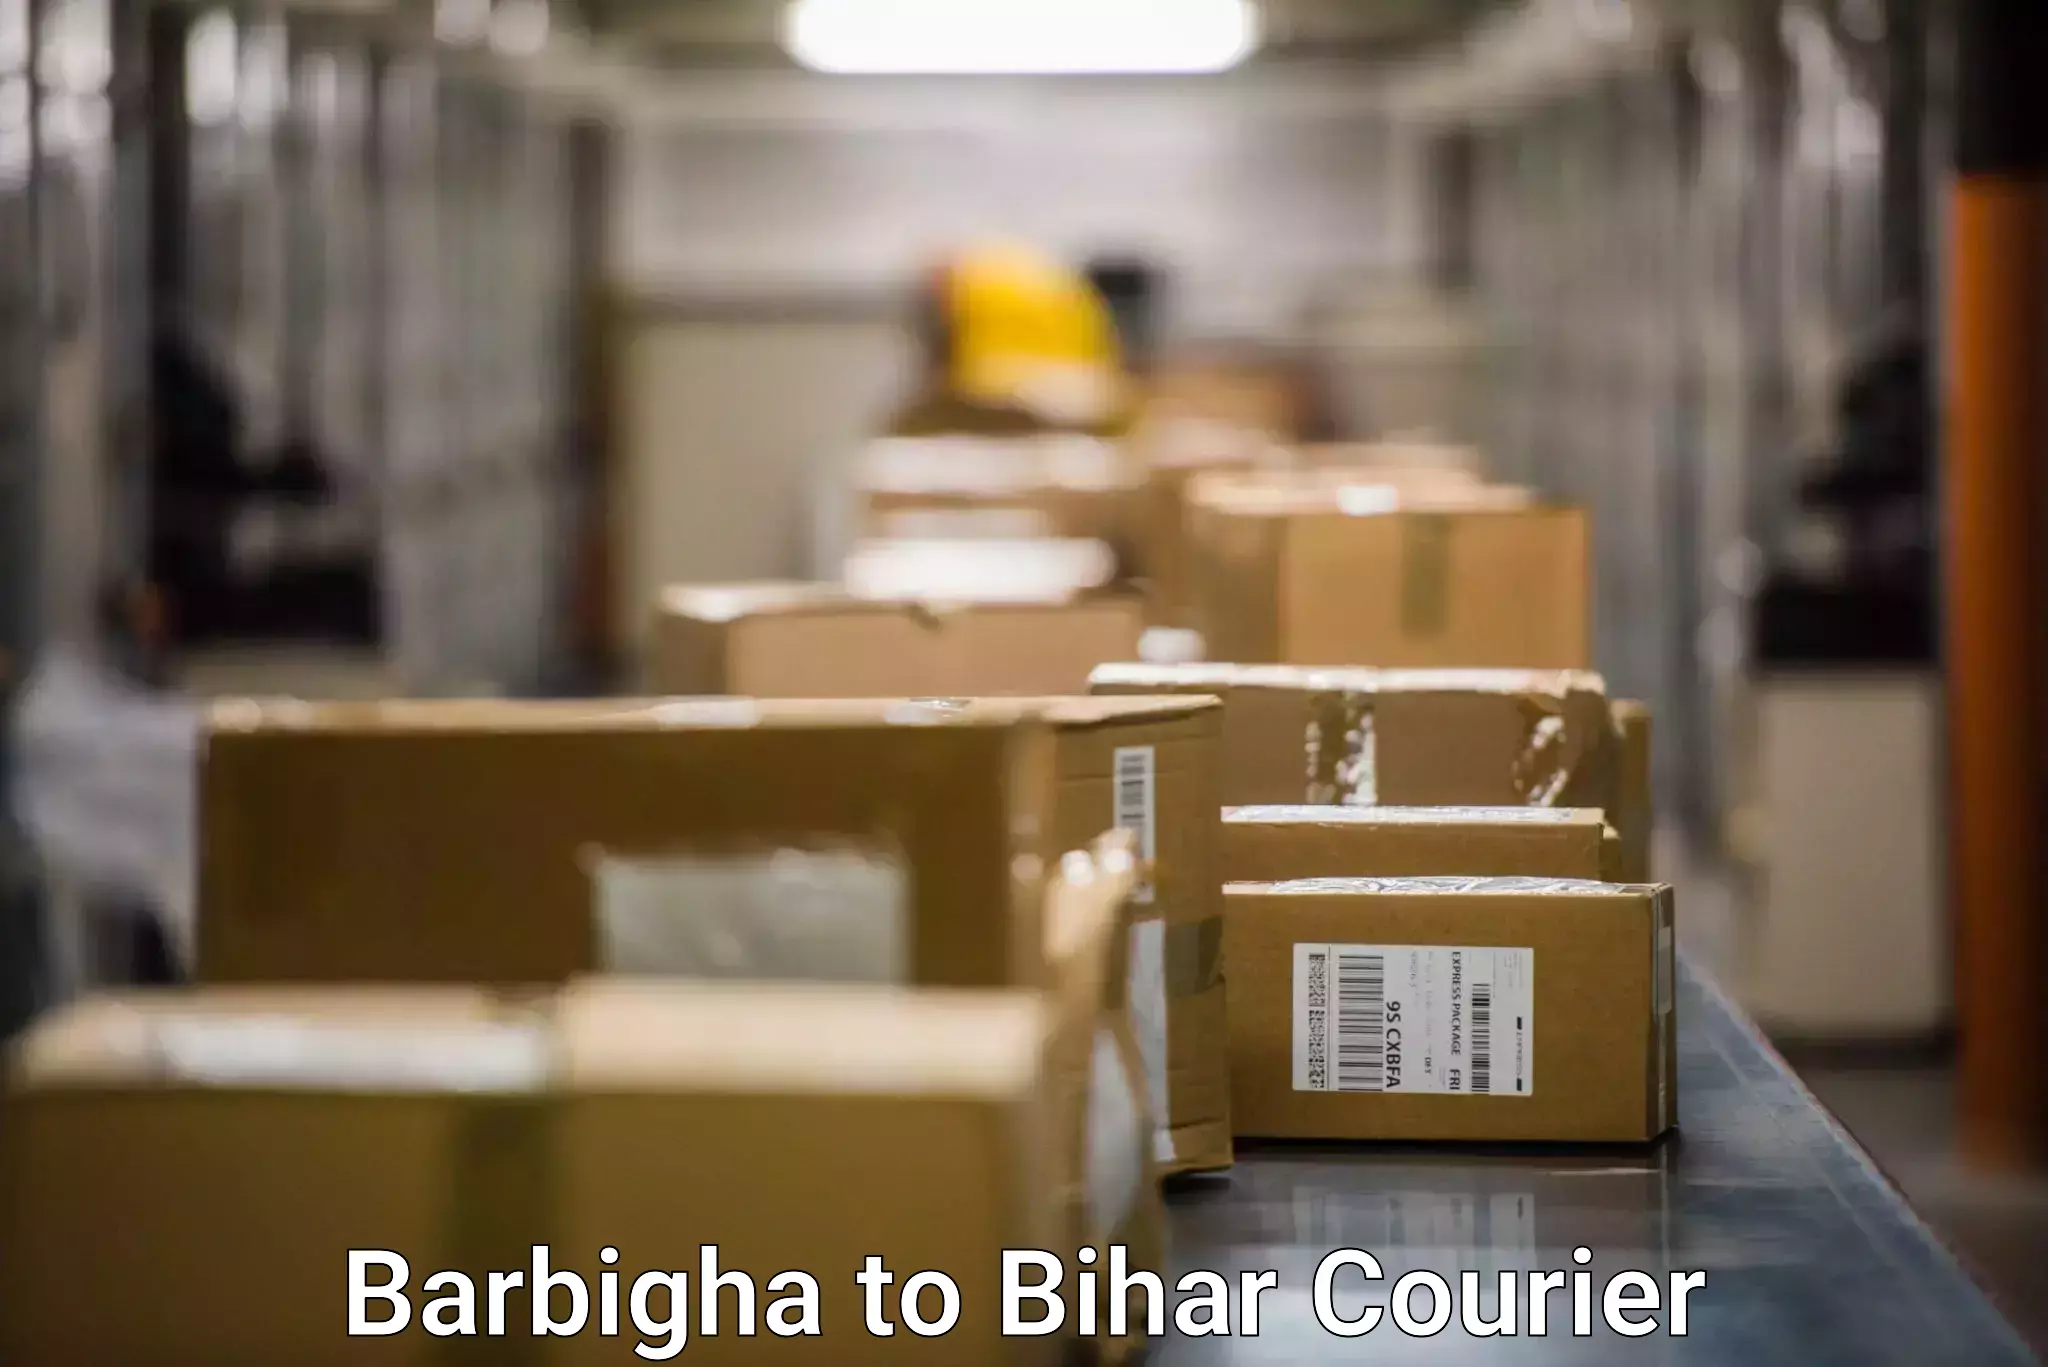 Courier service innovation Barbigha to Tajpur Samastipur